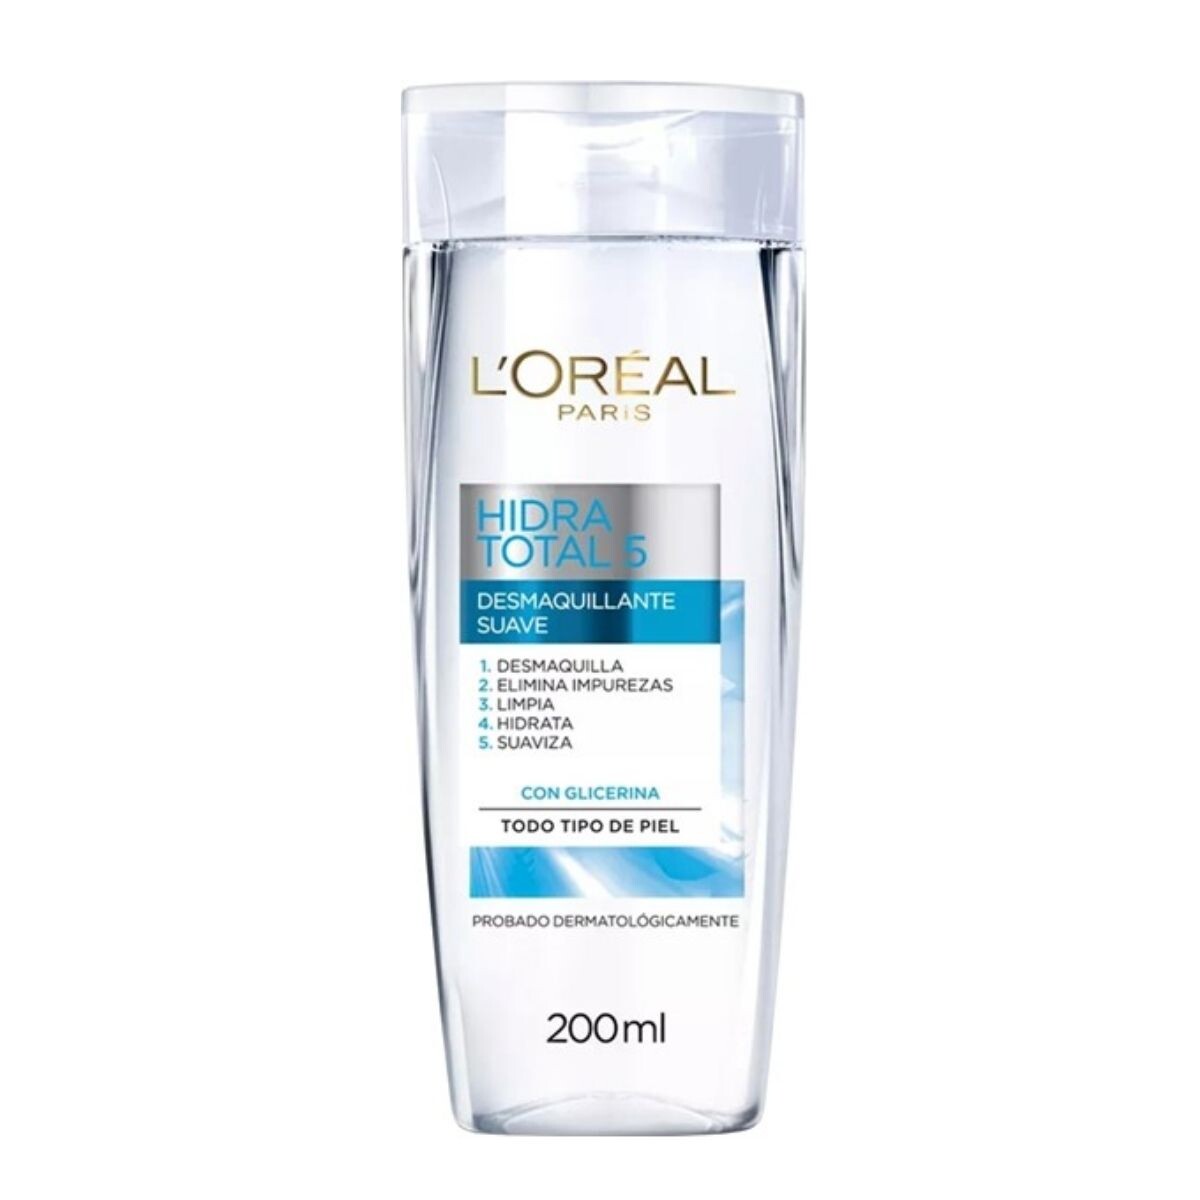 Desmaquillante L'Oréal Hidra Total 5 Leche 200 ML 